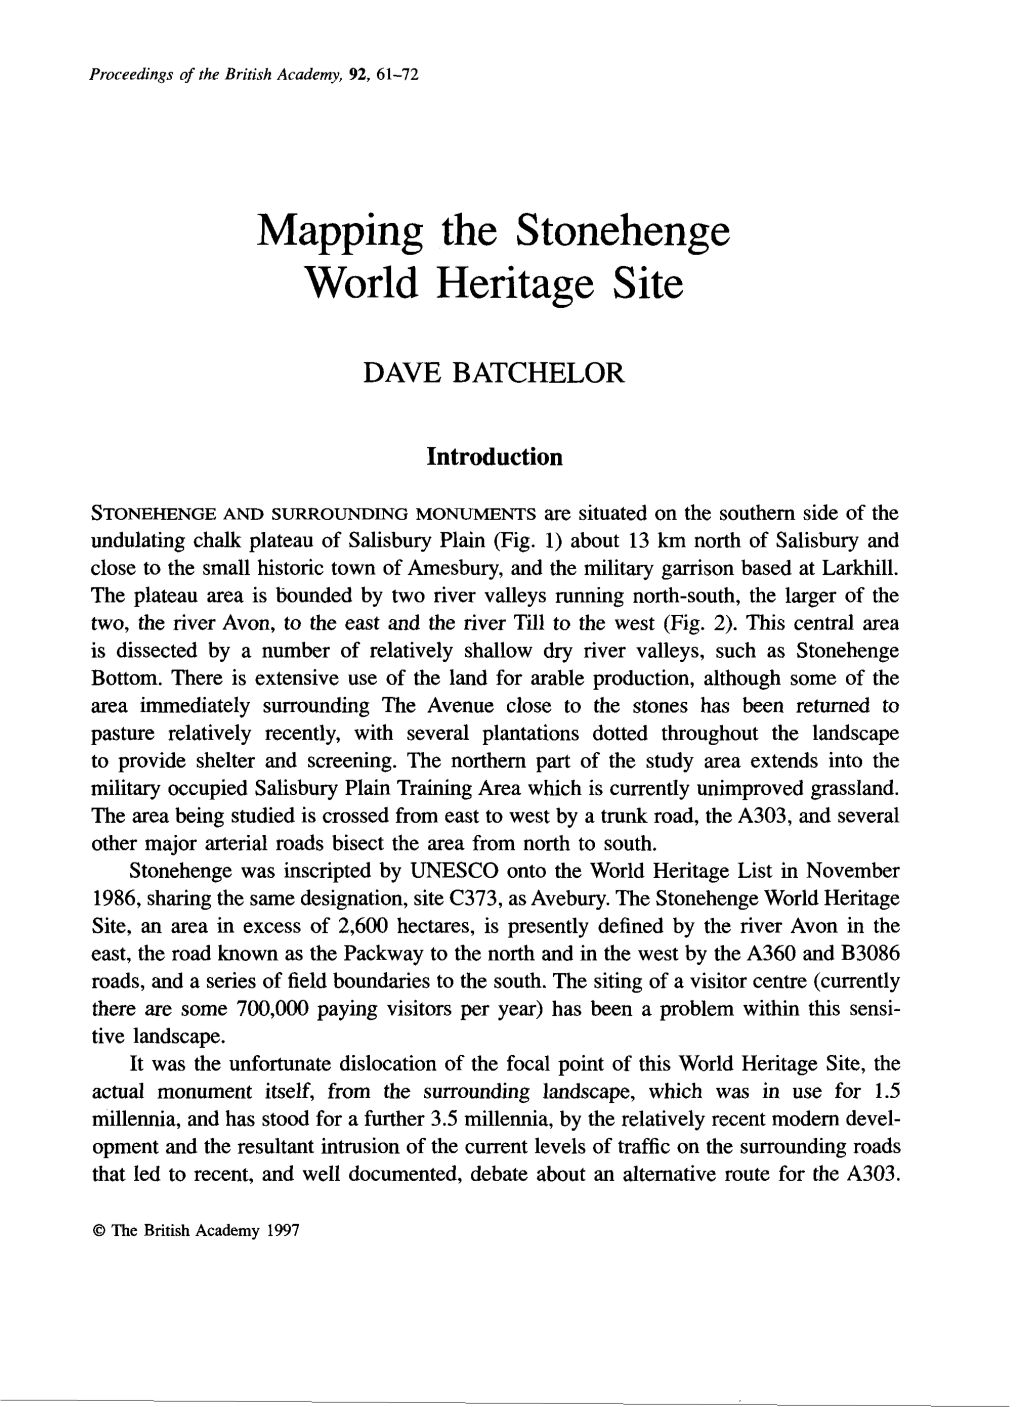 Mapping the Stonehenge World Heritage Site